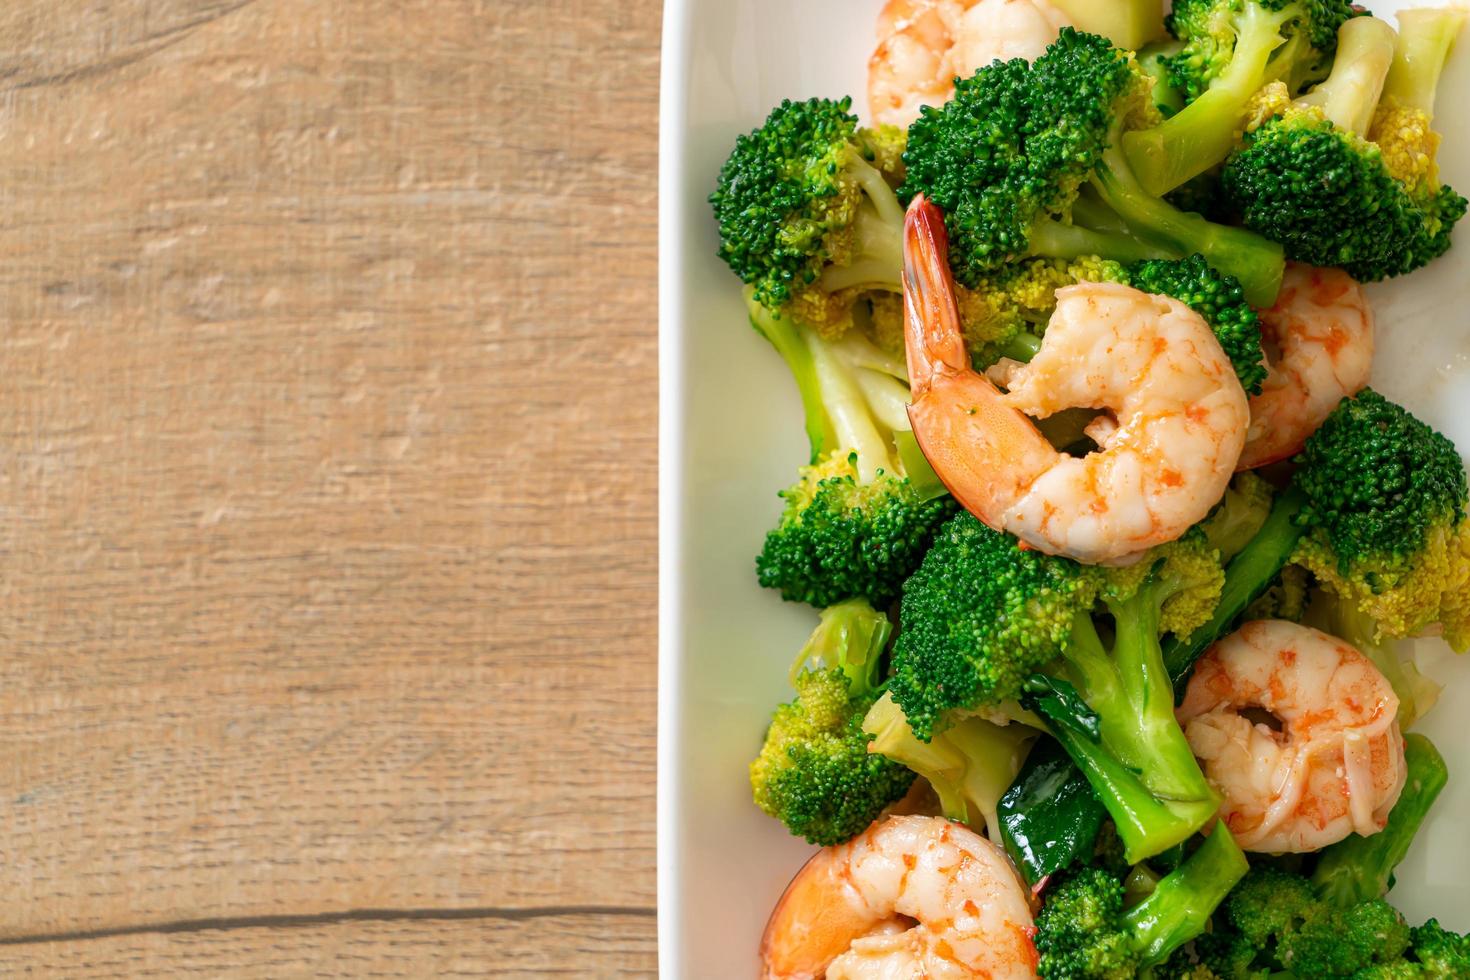 Stir-fried broccoli with shrimp - homemade food style photo